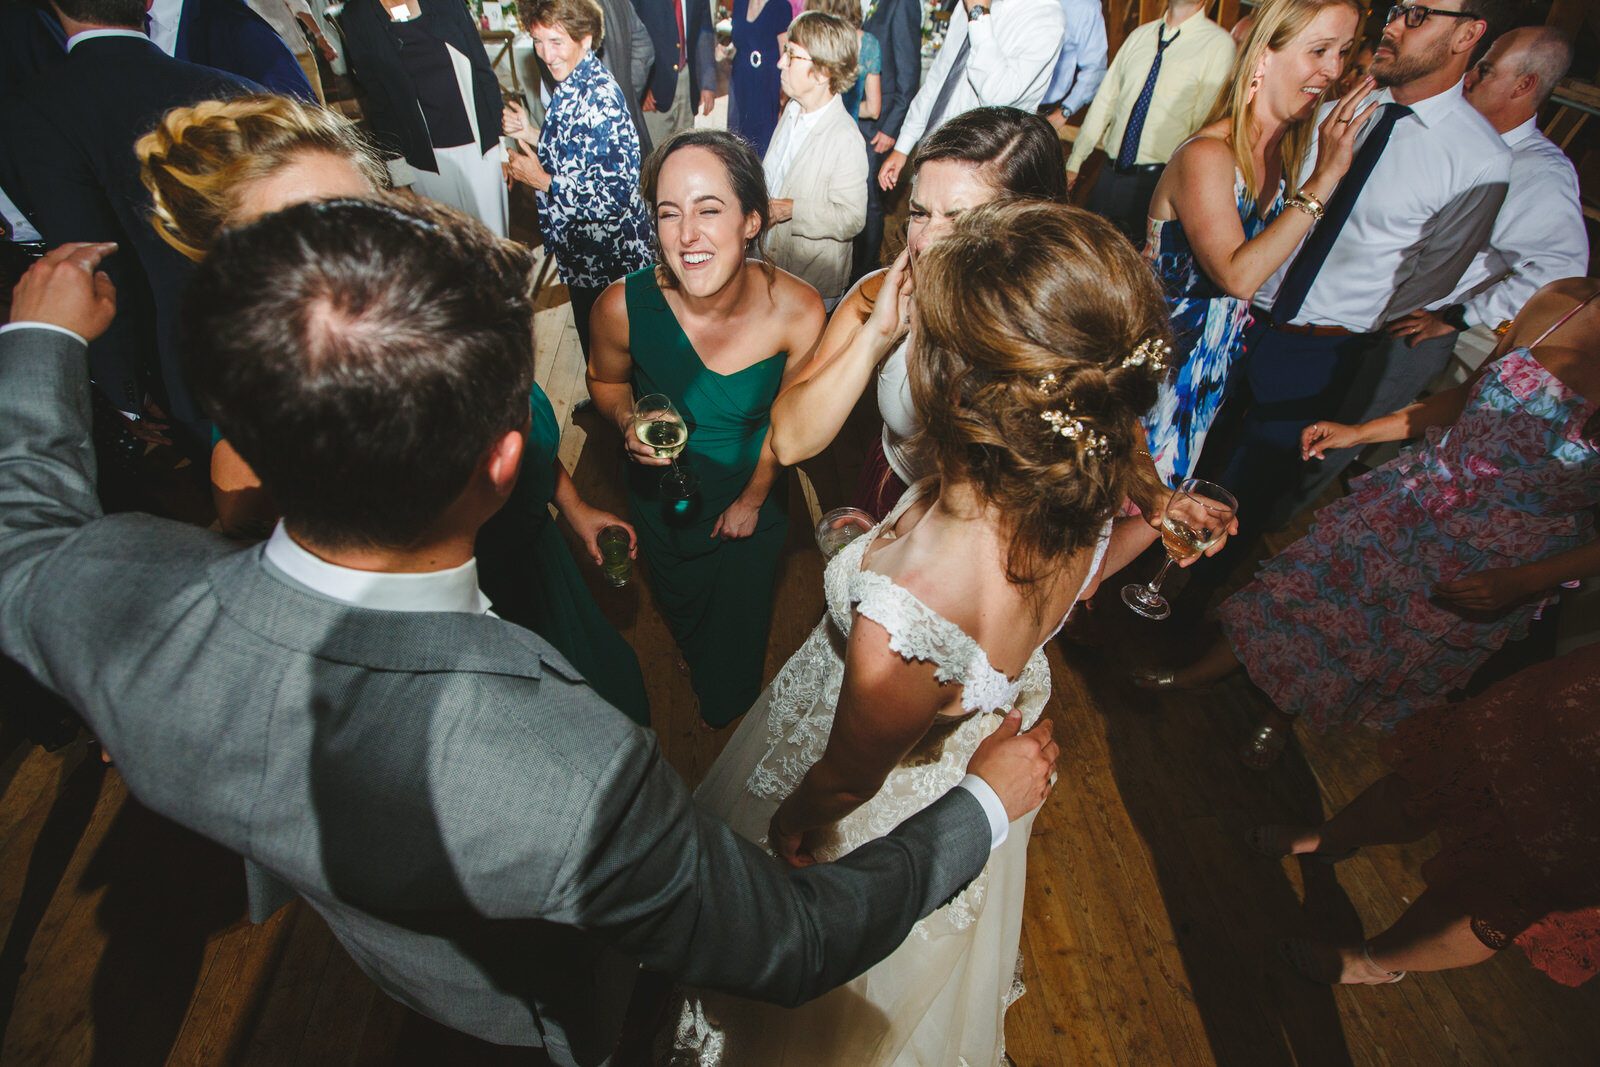 Friends Dancing at wedding - Satya Curcio Photography